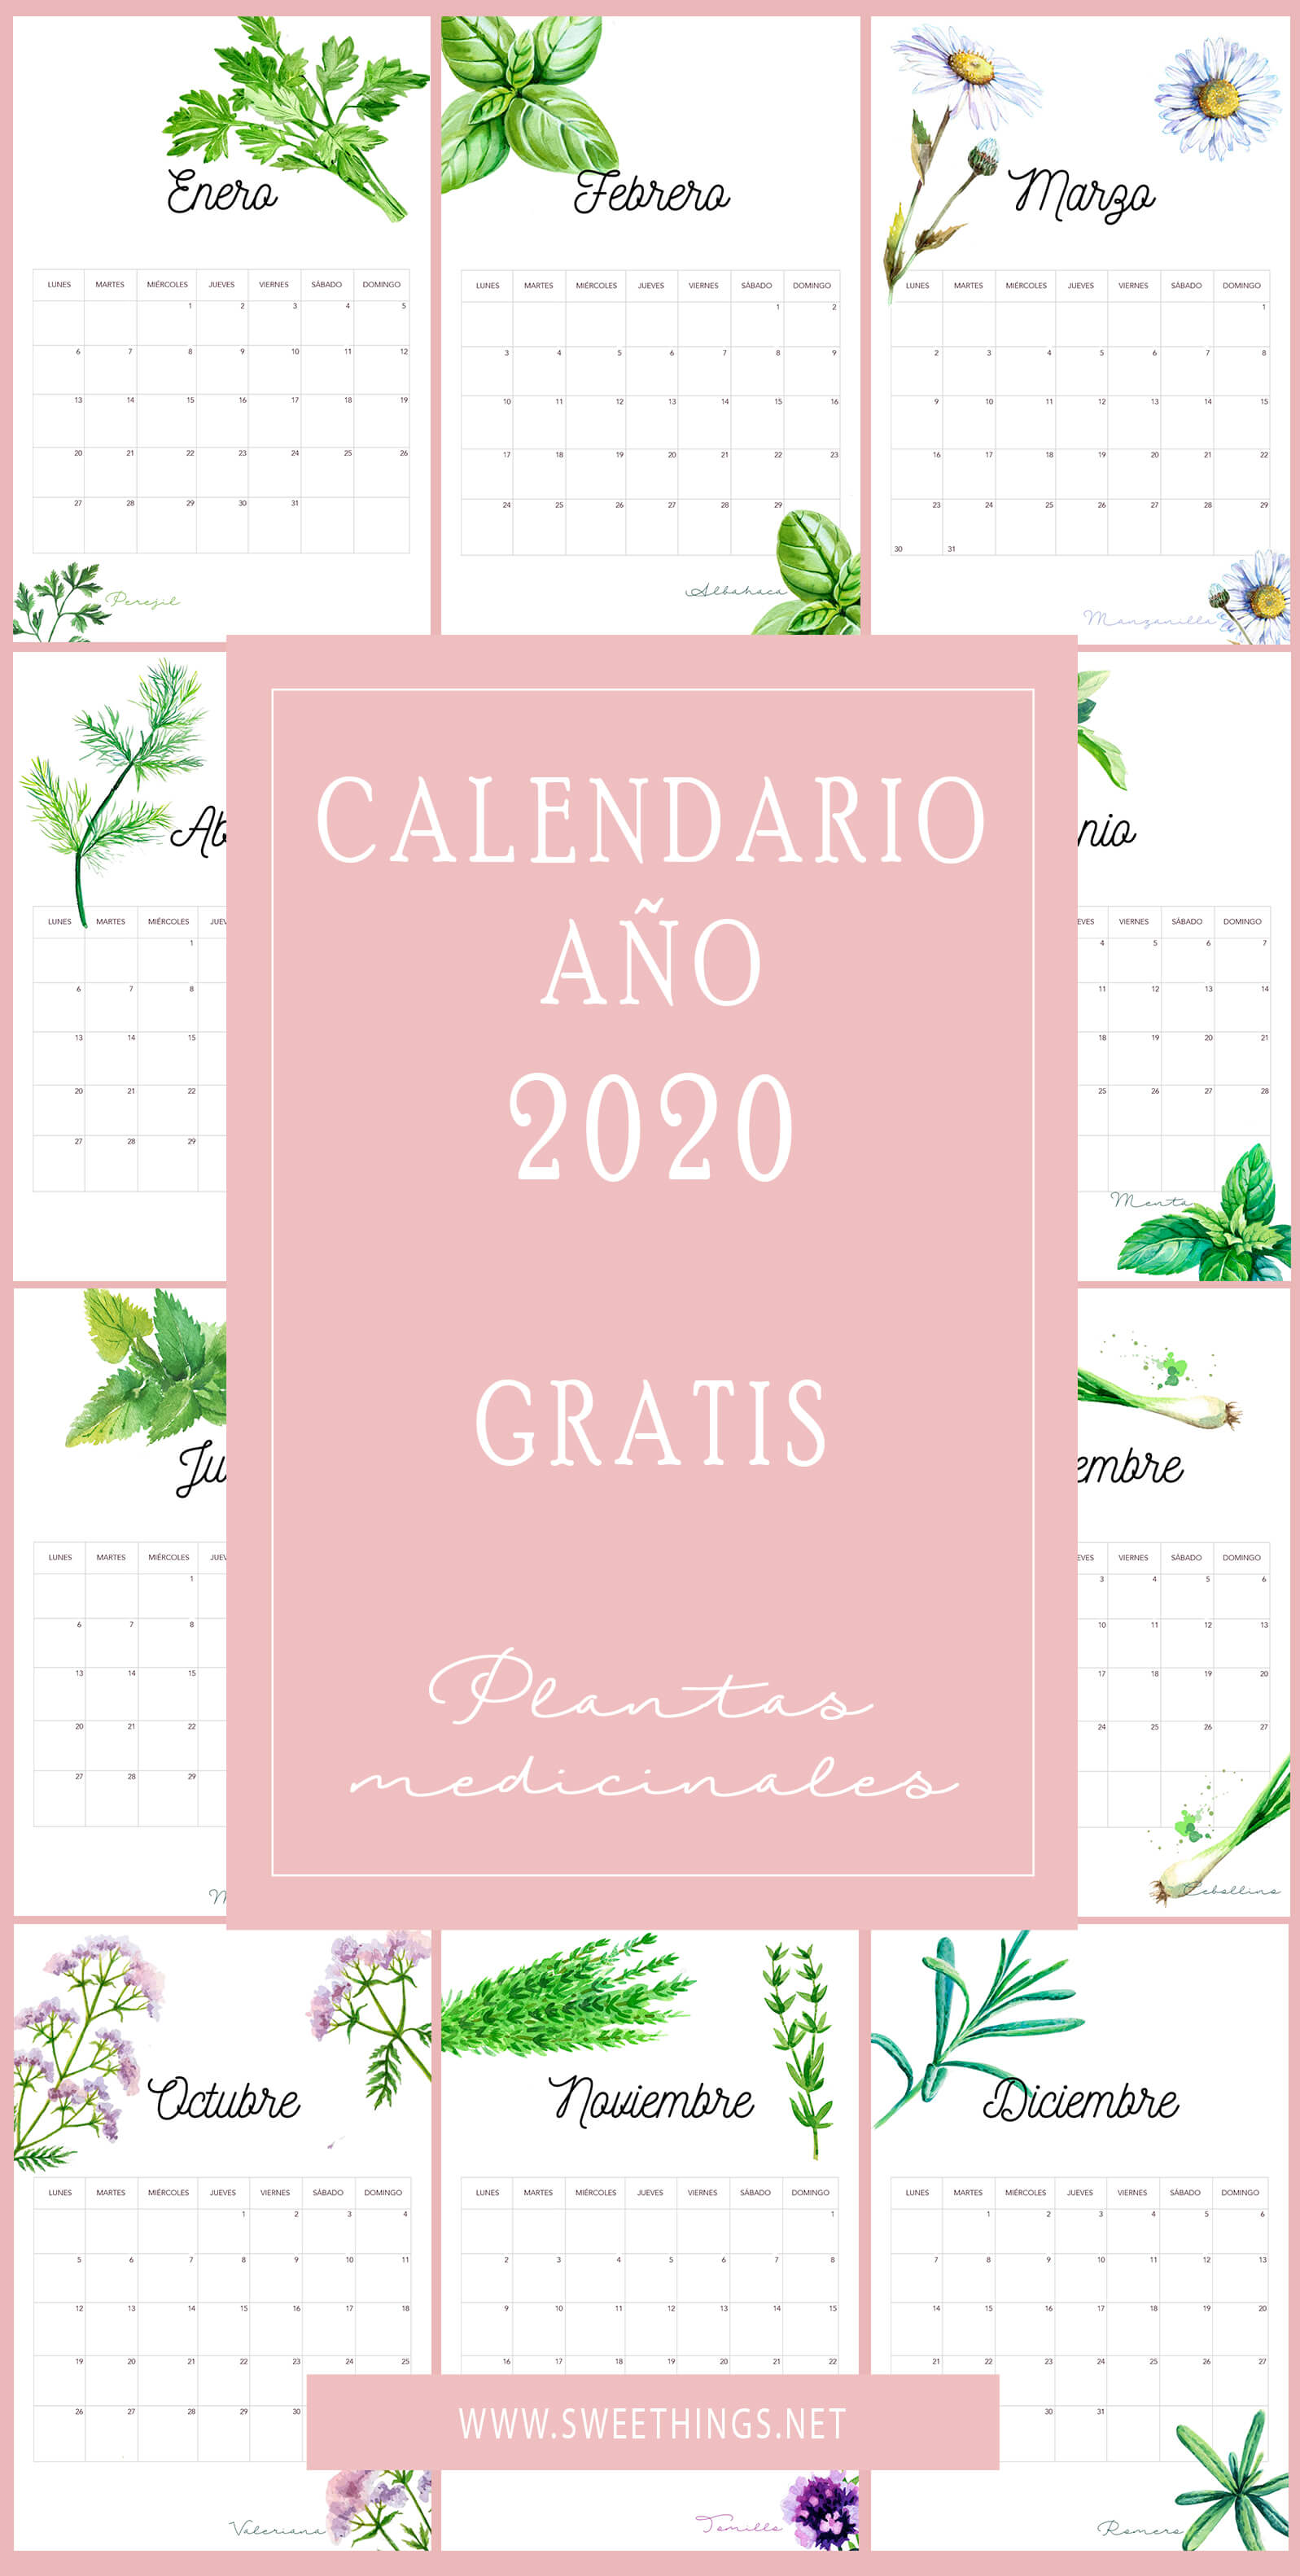 Calendario 2020 plantas gratis para descargar · Via www.sweethings.net